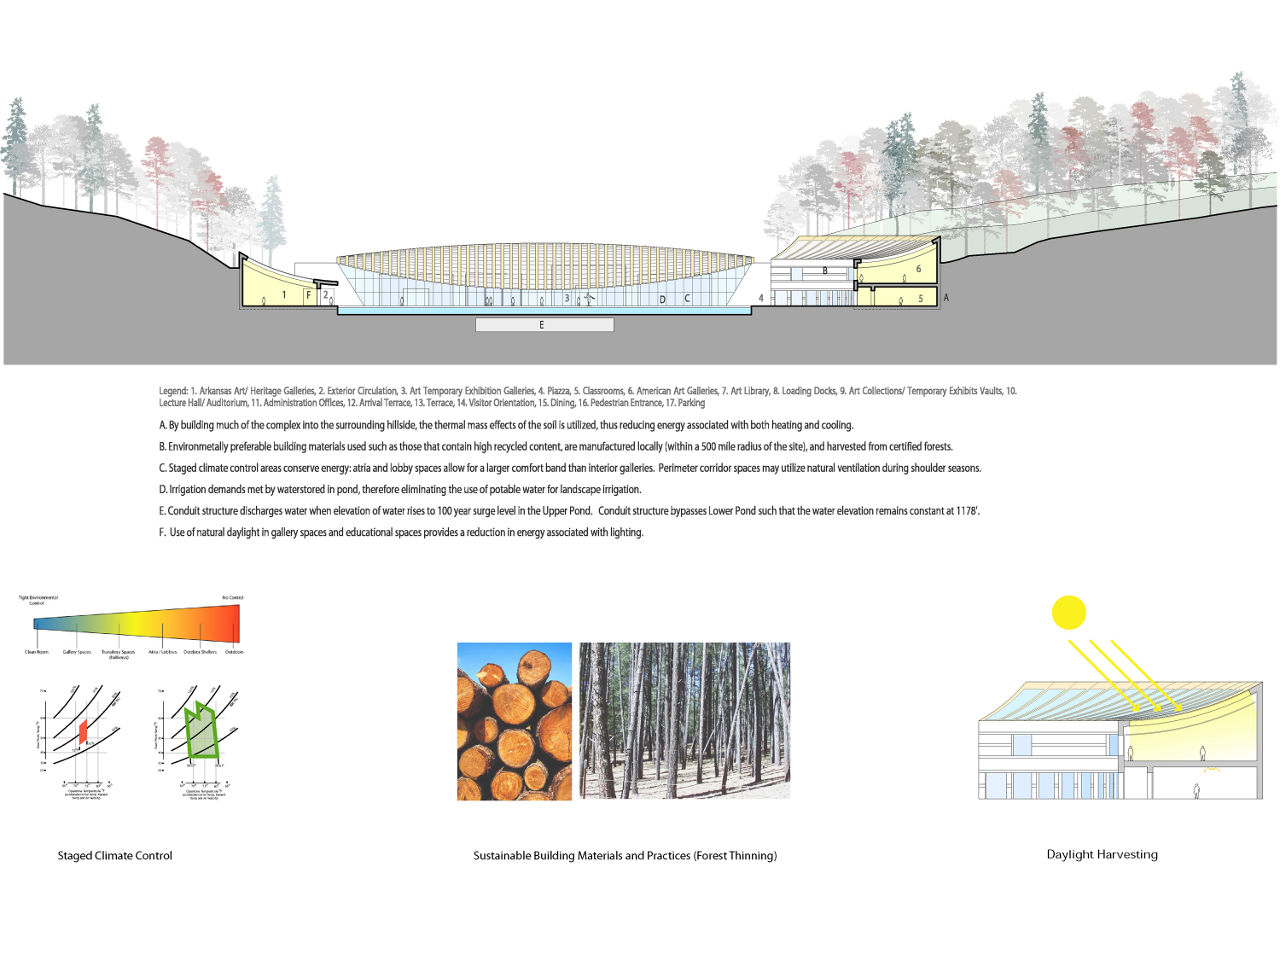 Crystal Bridges Museum of American Art by Safdie_Architects site diagram